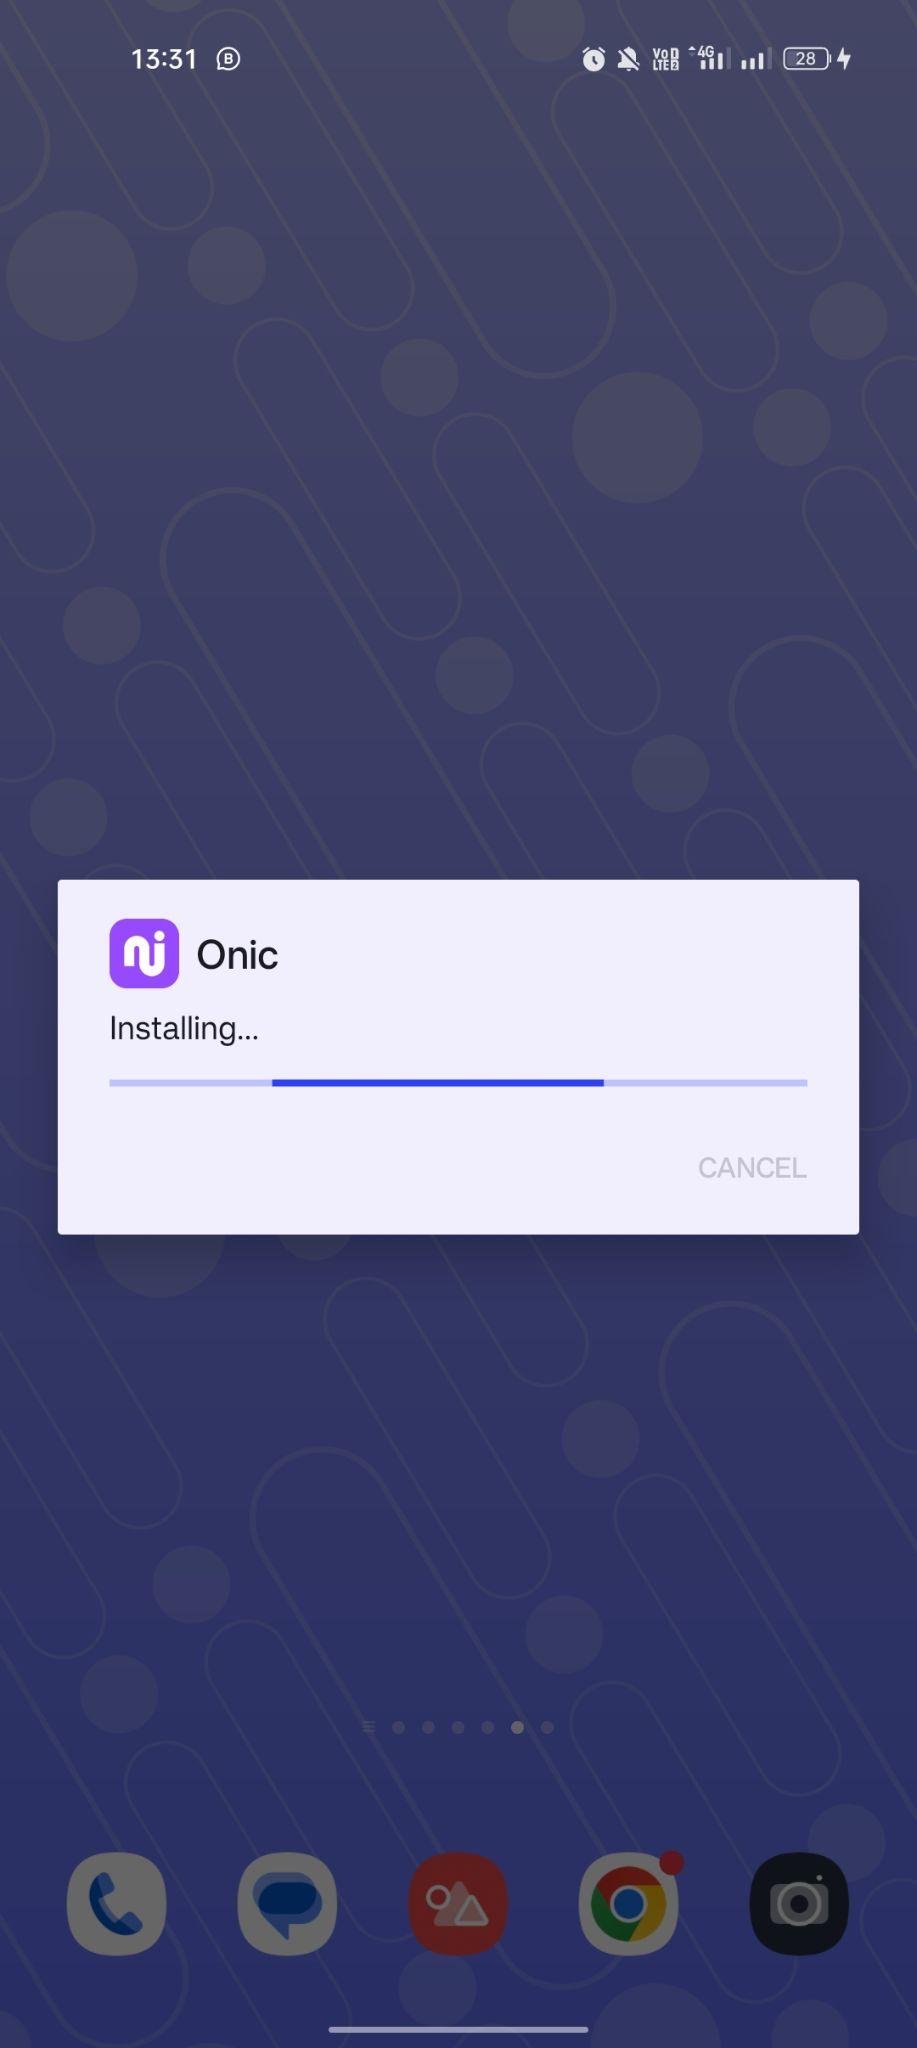 Onic apk installing